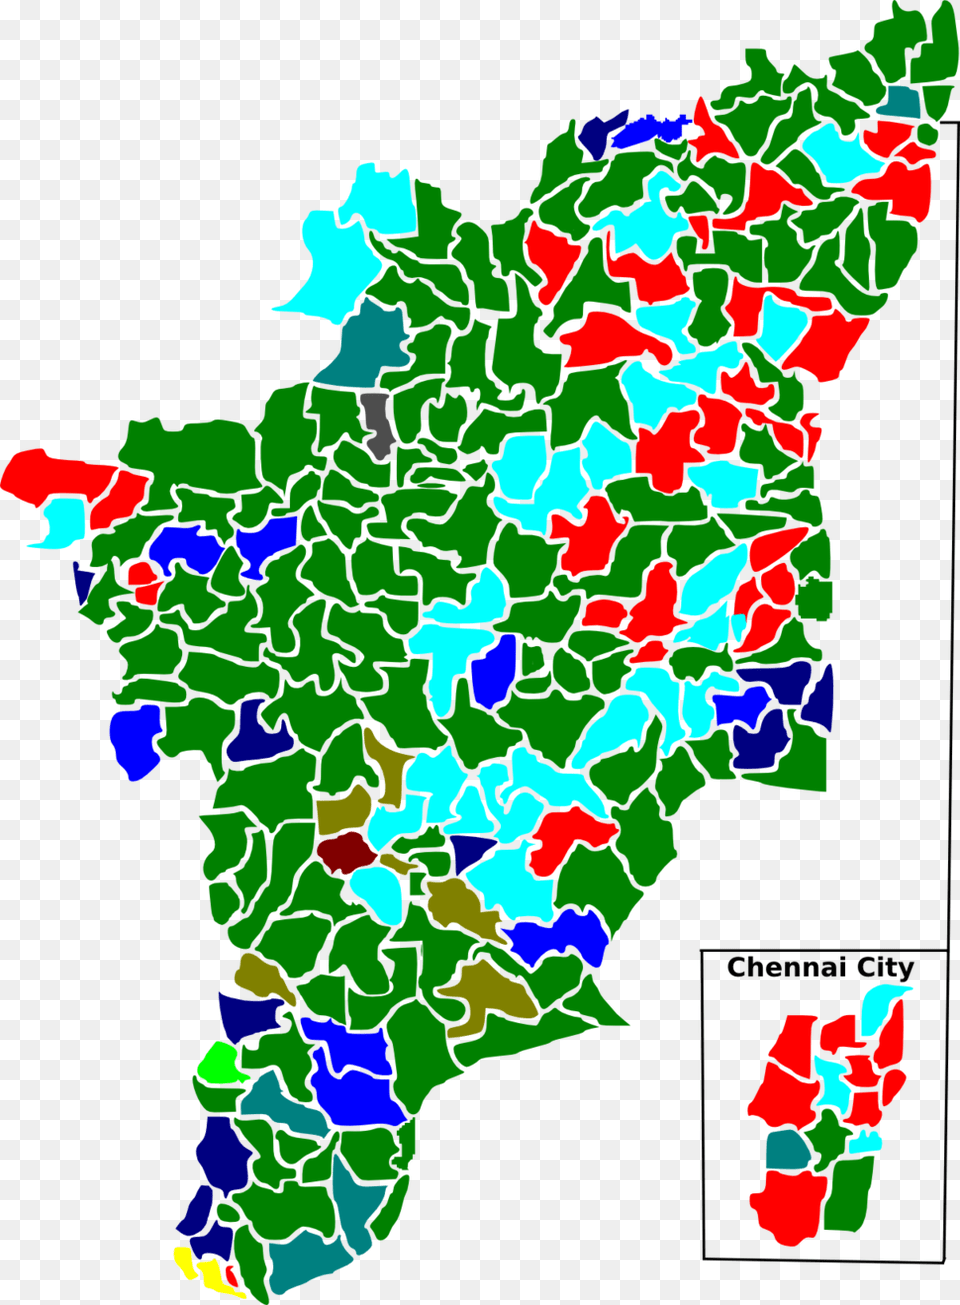 Tamil Nadu Legislative Election Map By Parties Tamil Nadu Election Map 2019, Chart, Plot, Atlas, Diagram Png